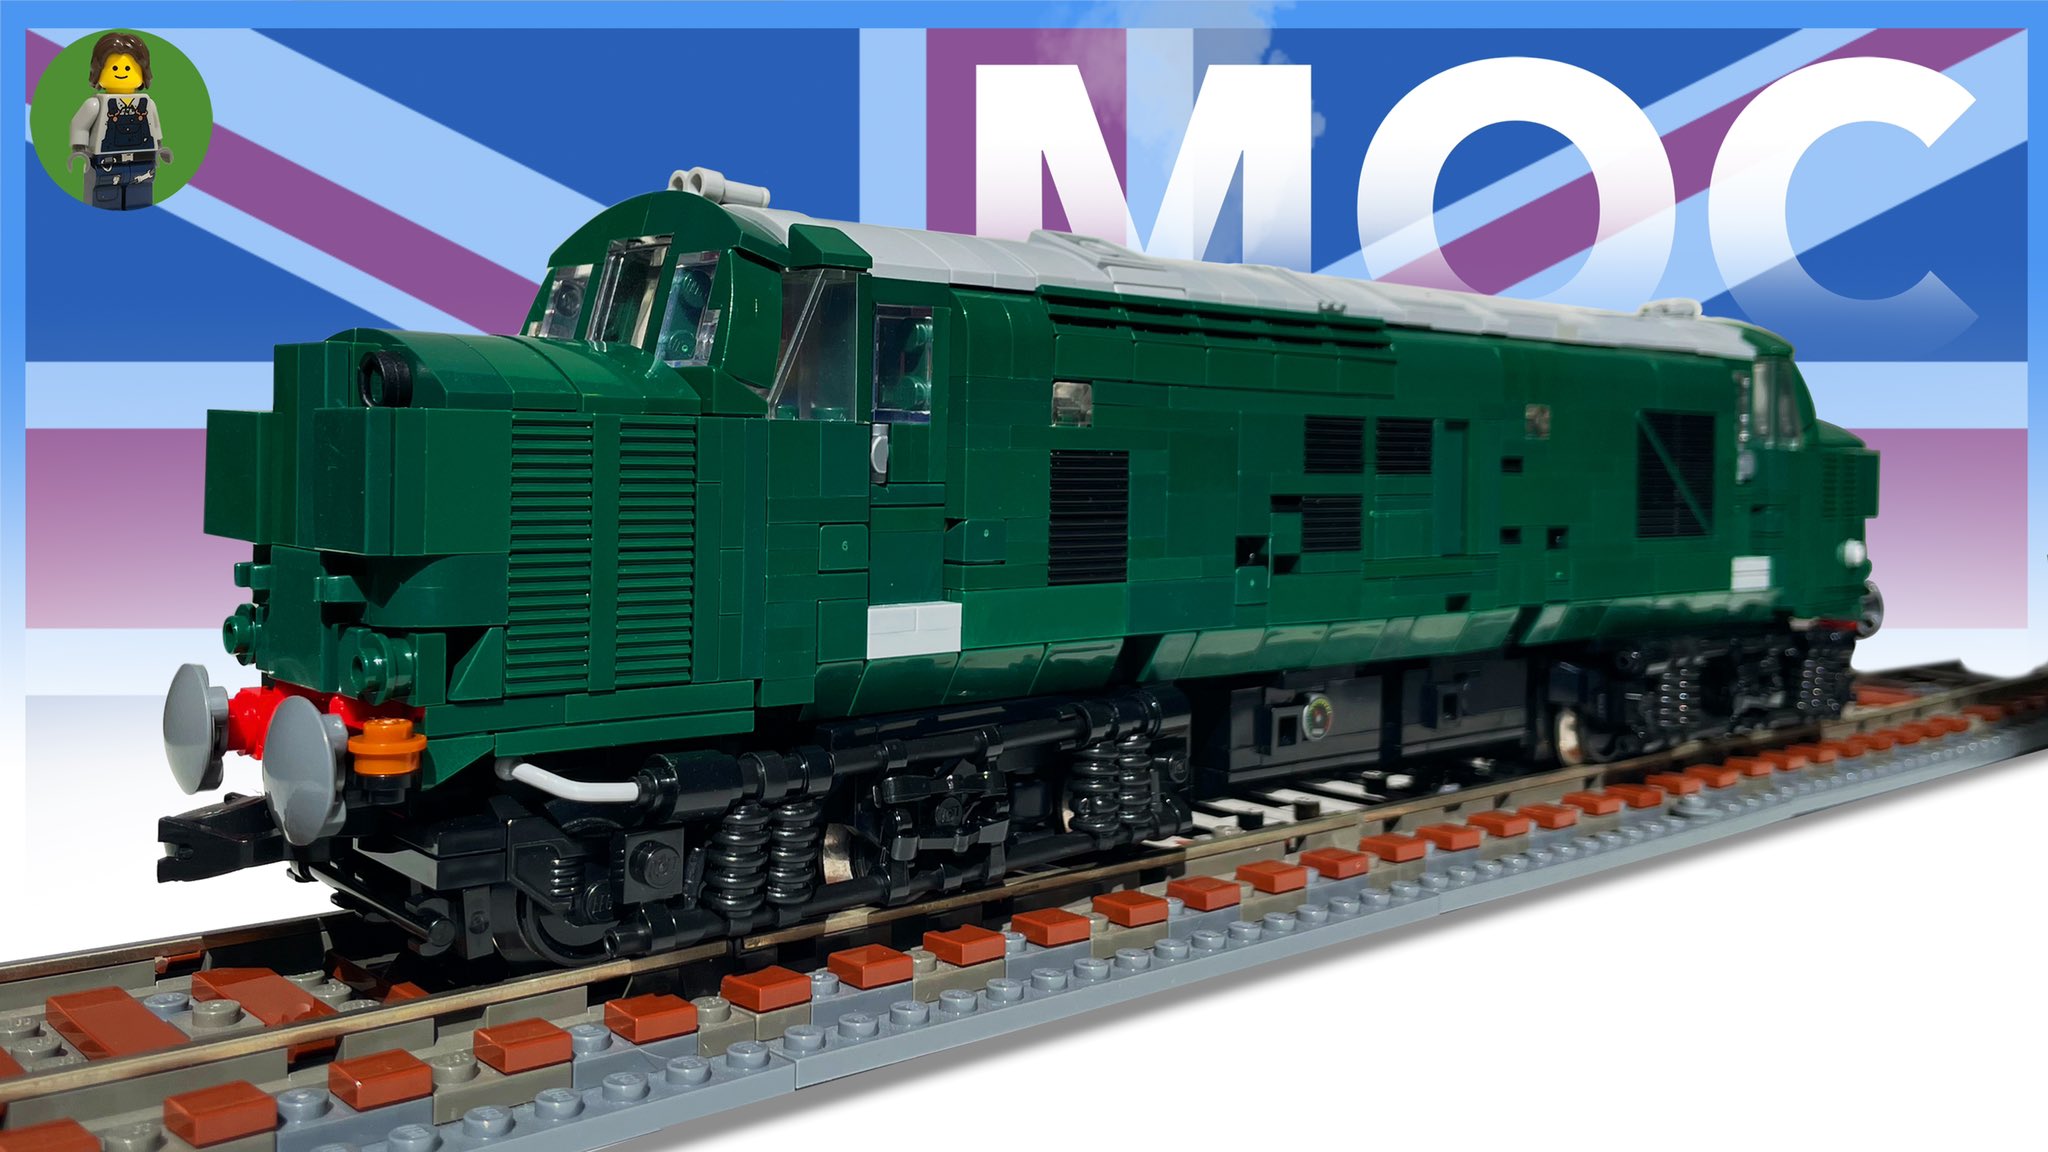 Sam on Twitter: "Finally video! Running my new LEGO BR Class 37 - Train https://t.co/4Y5XRhG6T6 via @YouTube #LEGO #MOC https://t.co/ivwQDd6rci" / Twitter